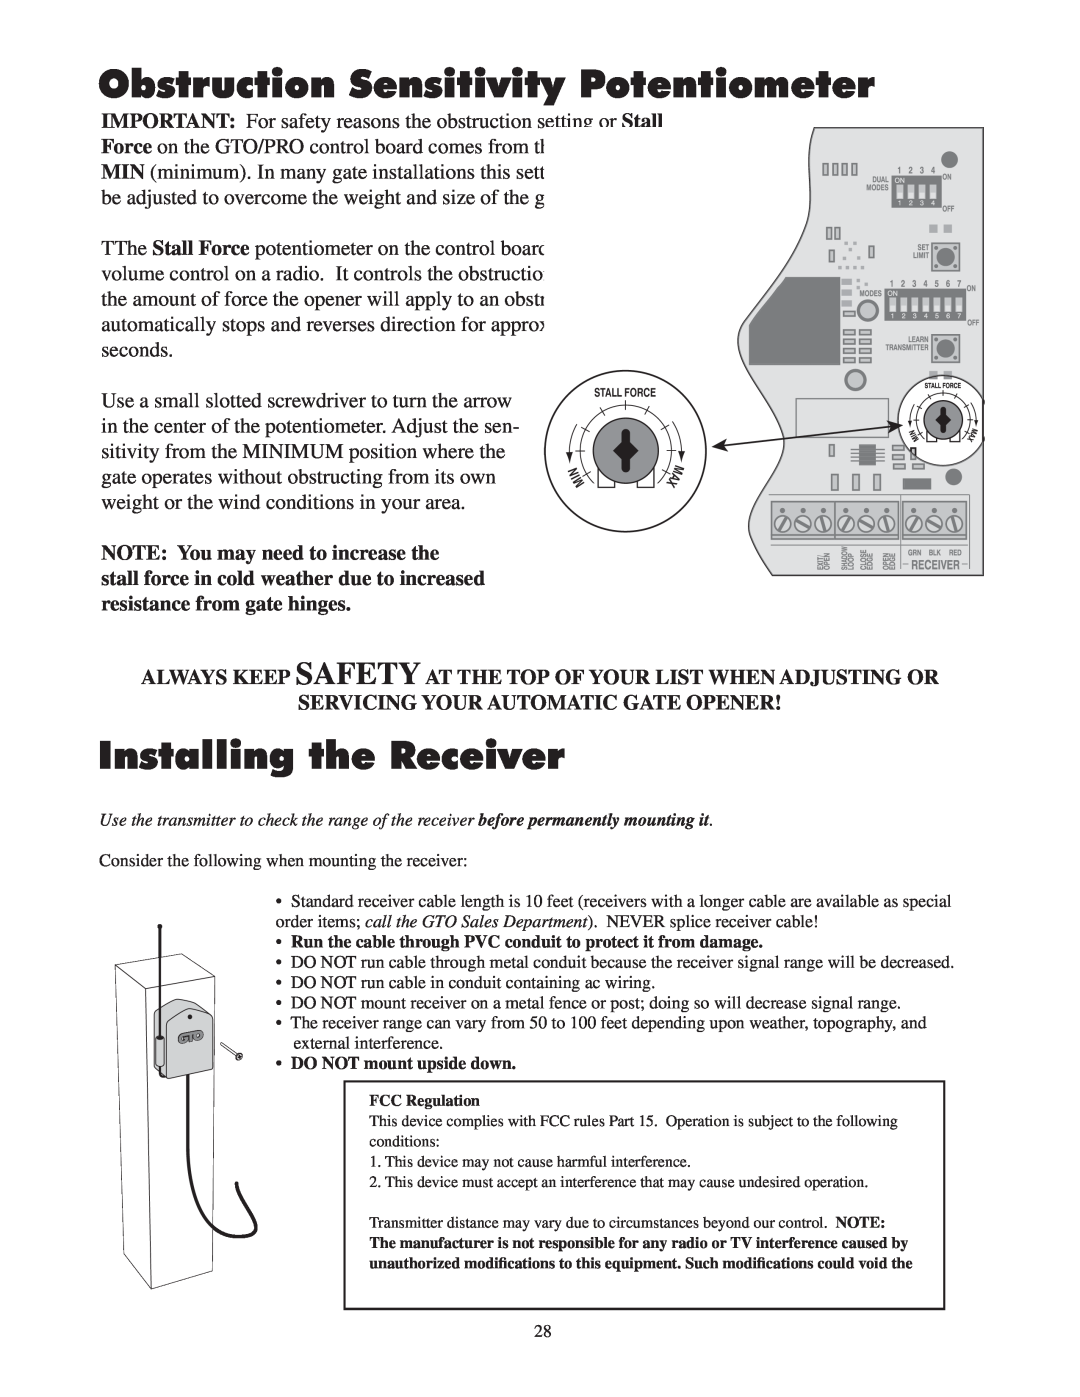 GTO 2550, 2502 installation manual Obstruction Sensitivity Potentiometer, Installing the Receiver 